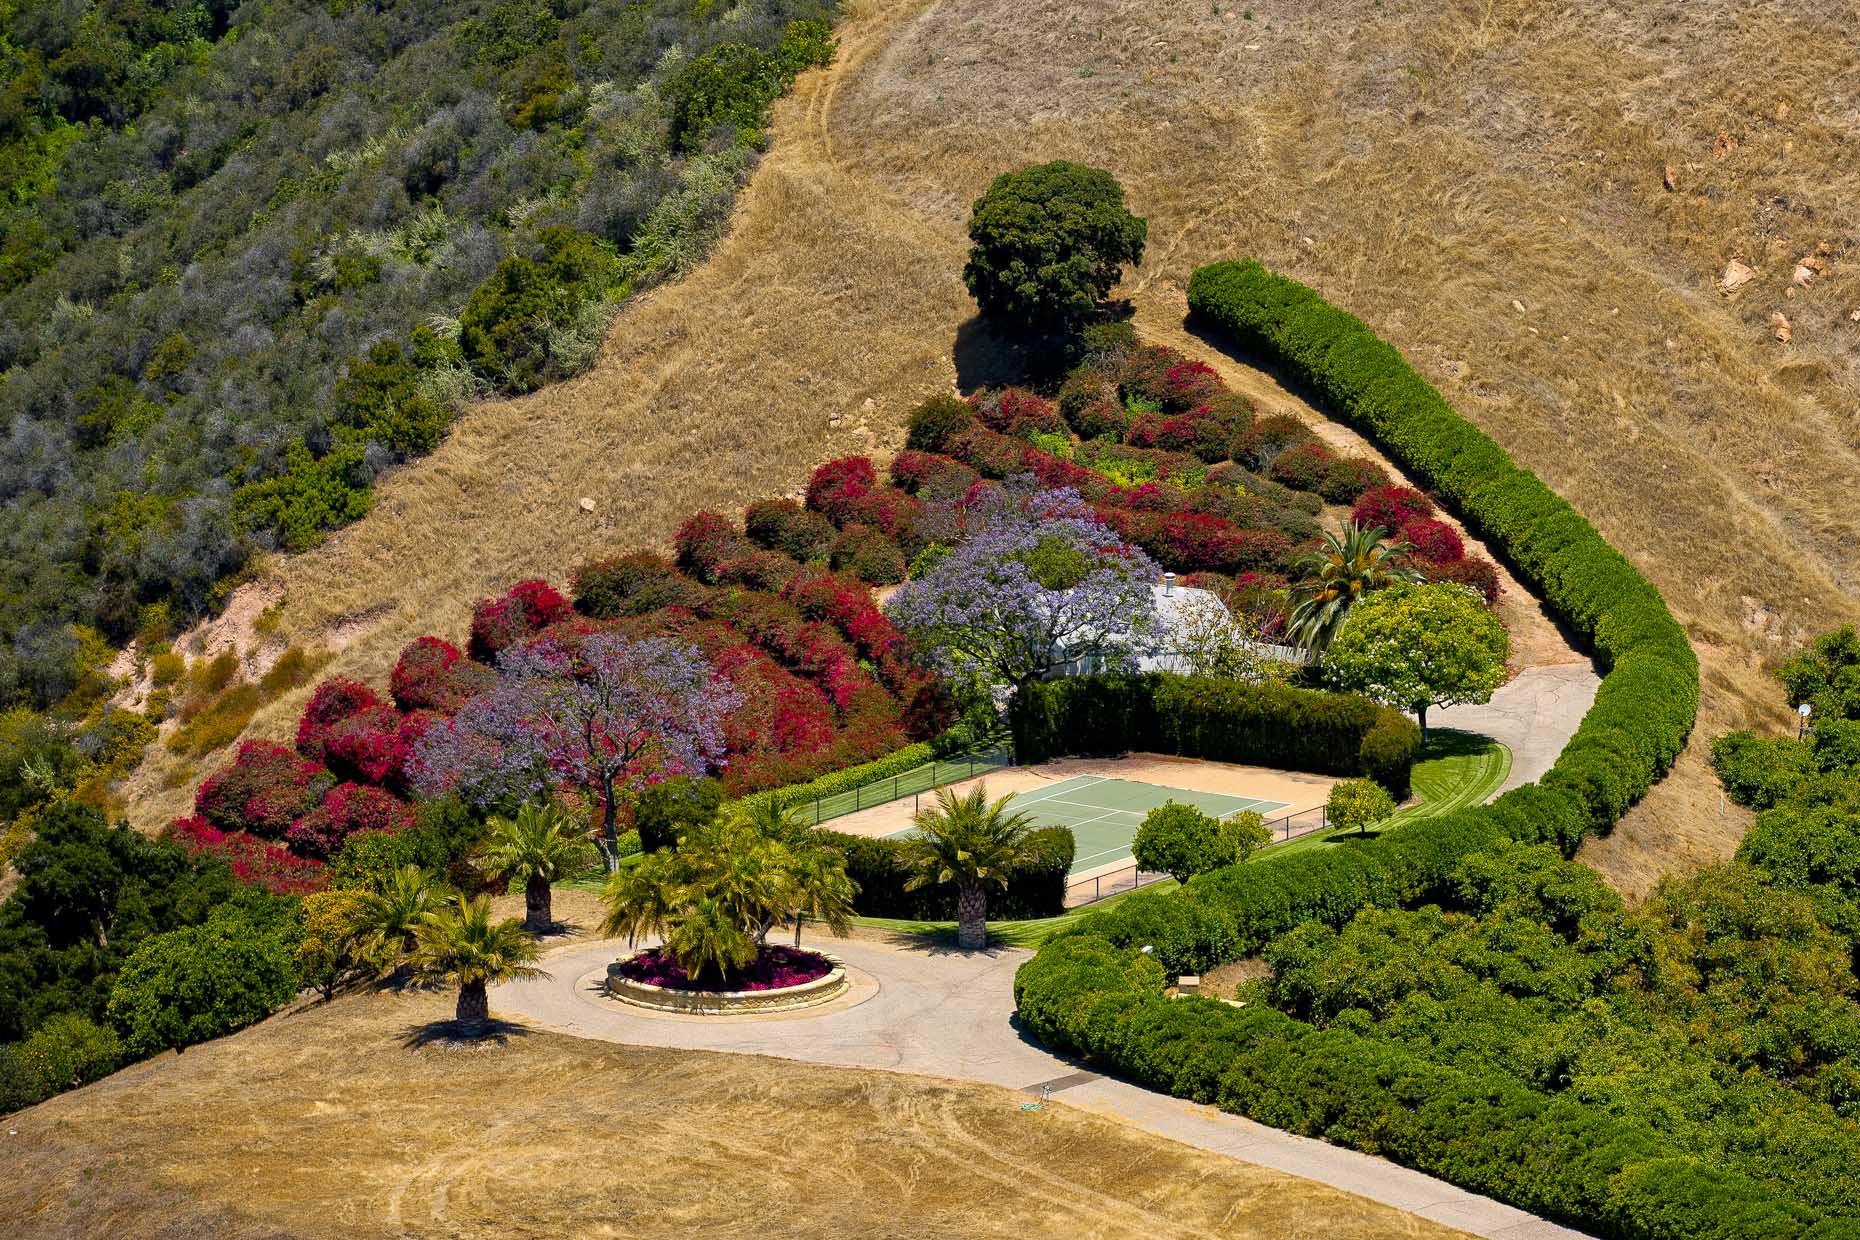 Santa Barbara aerial photography by Stefen Turner